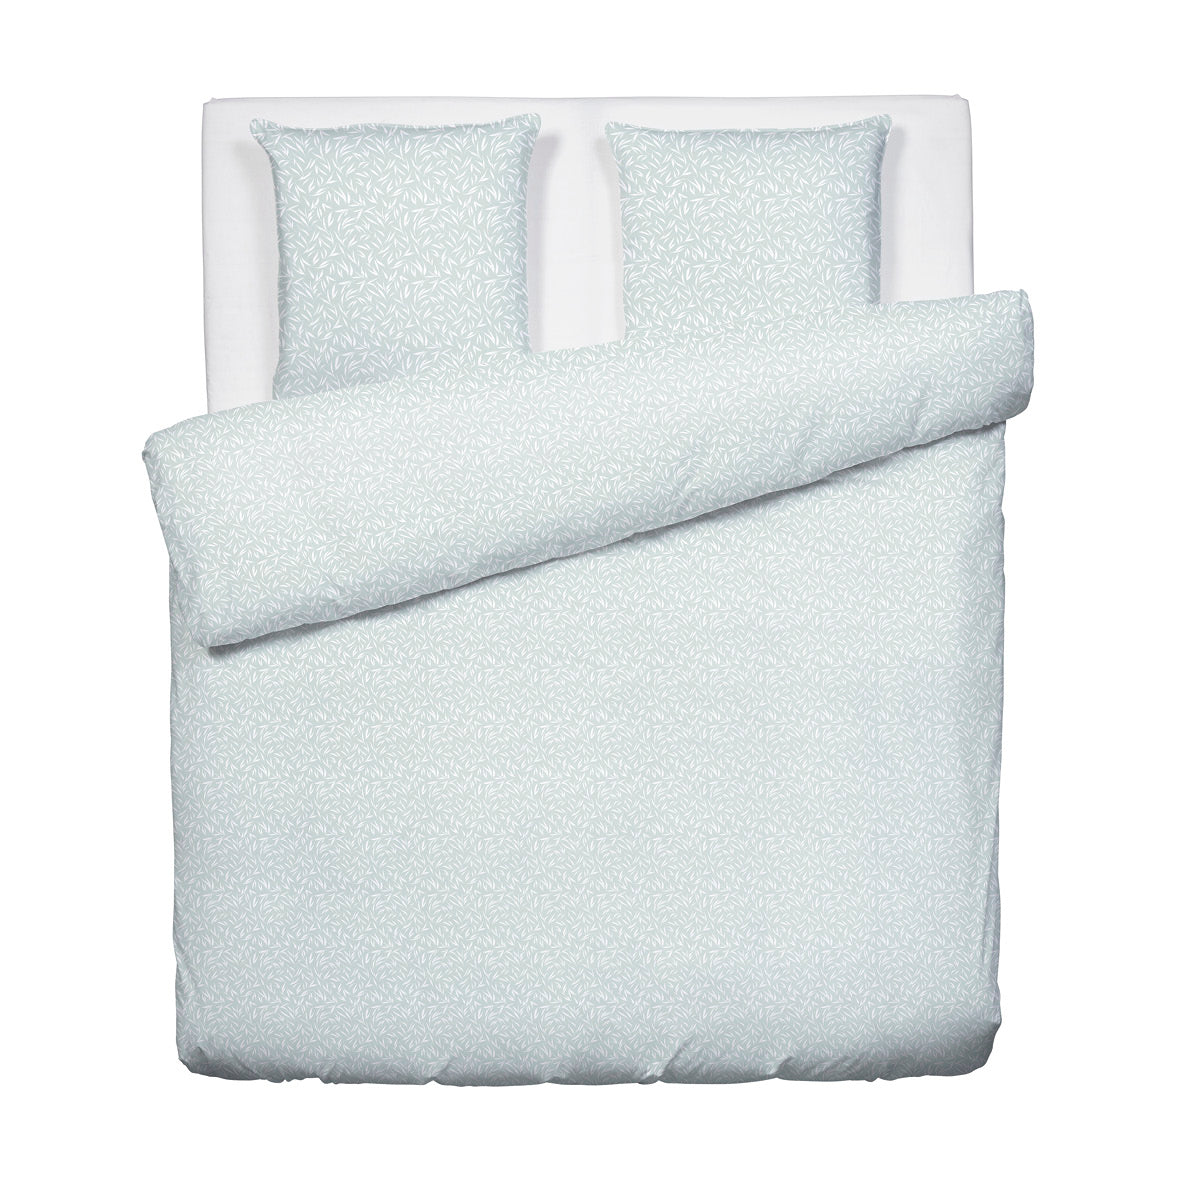 Duvet cover + pillowcase(s) cotton satin - Oliveira Green